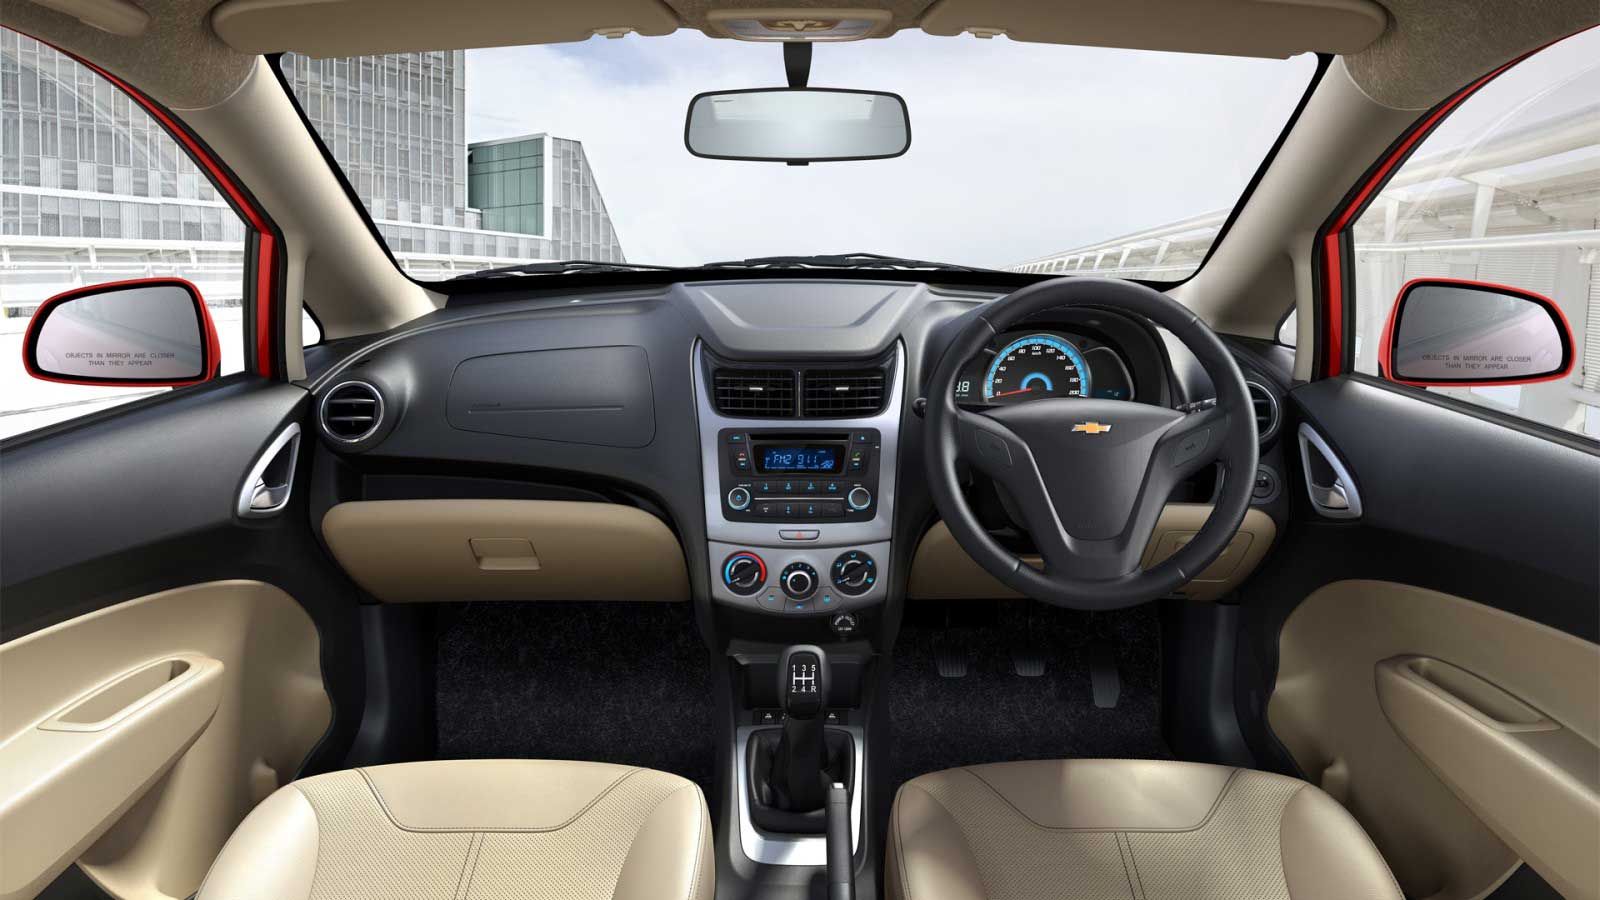 Chevrolet Sail Hatchback 1.3 Base Interior front view